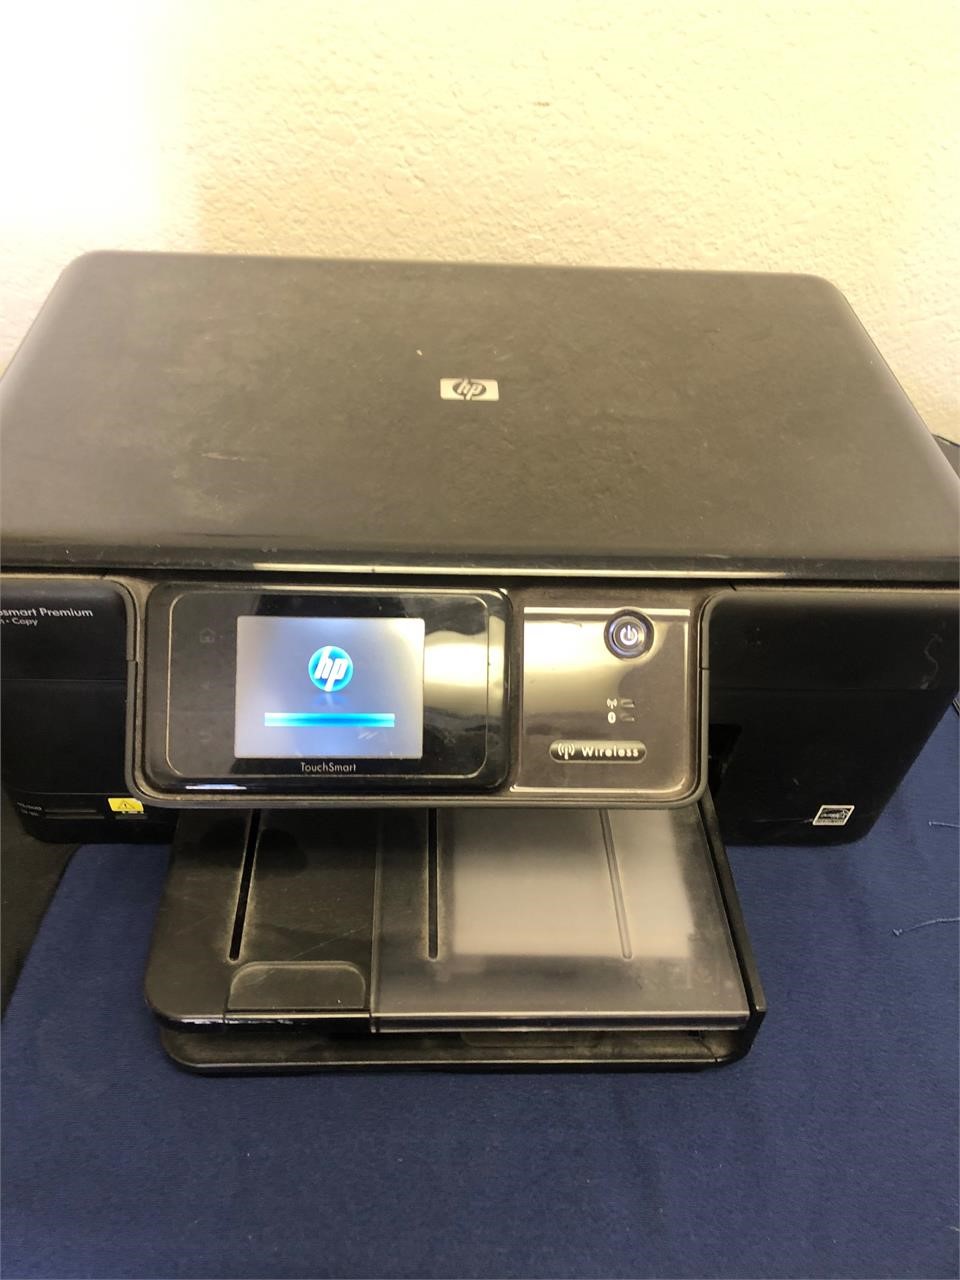 HP printer #122